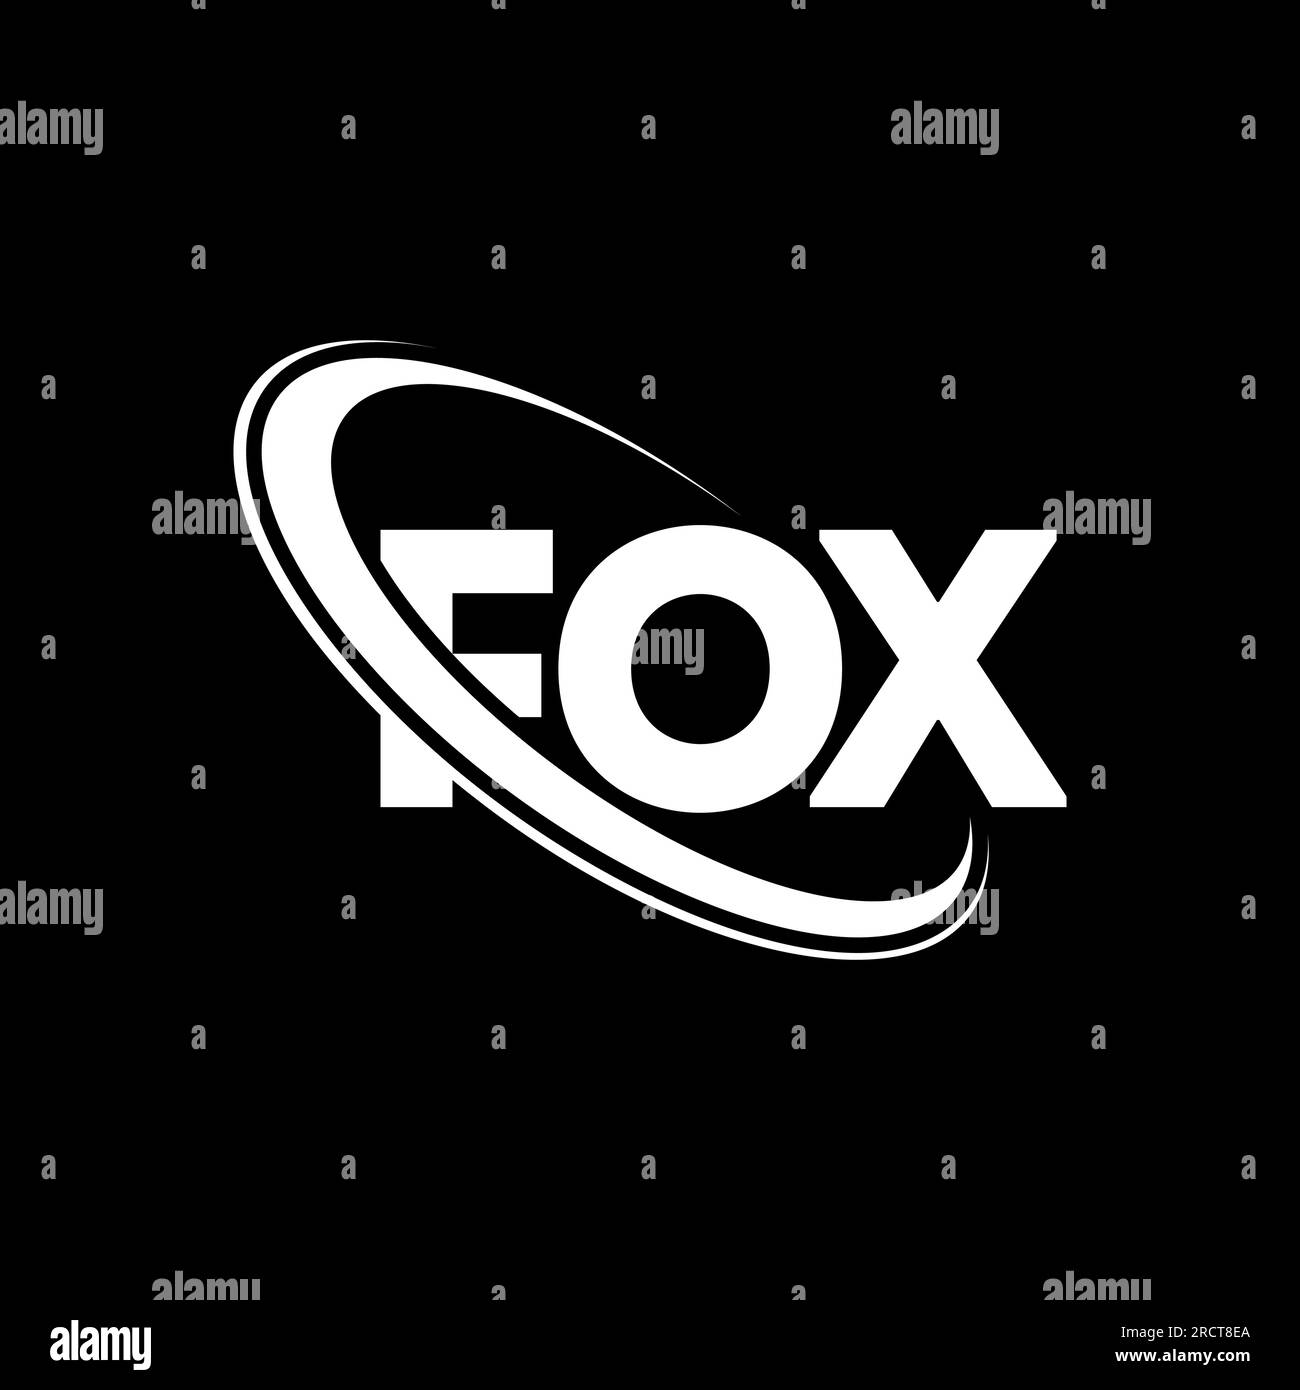 fox racing logo on paper Stock Photo - Alamy